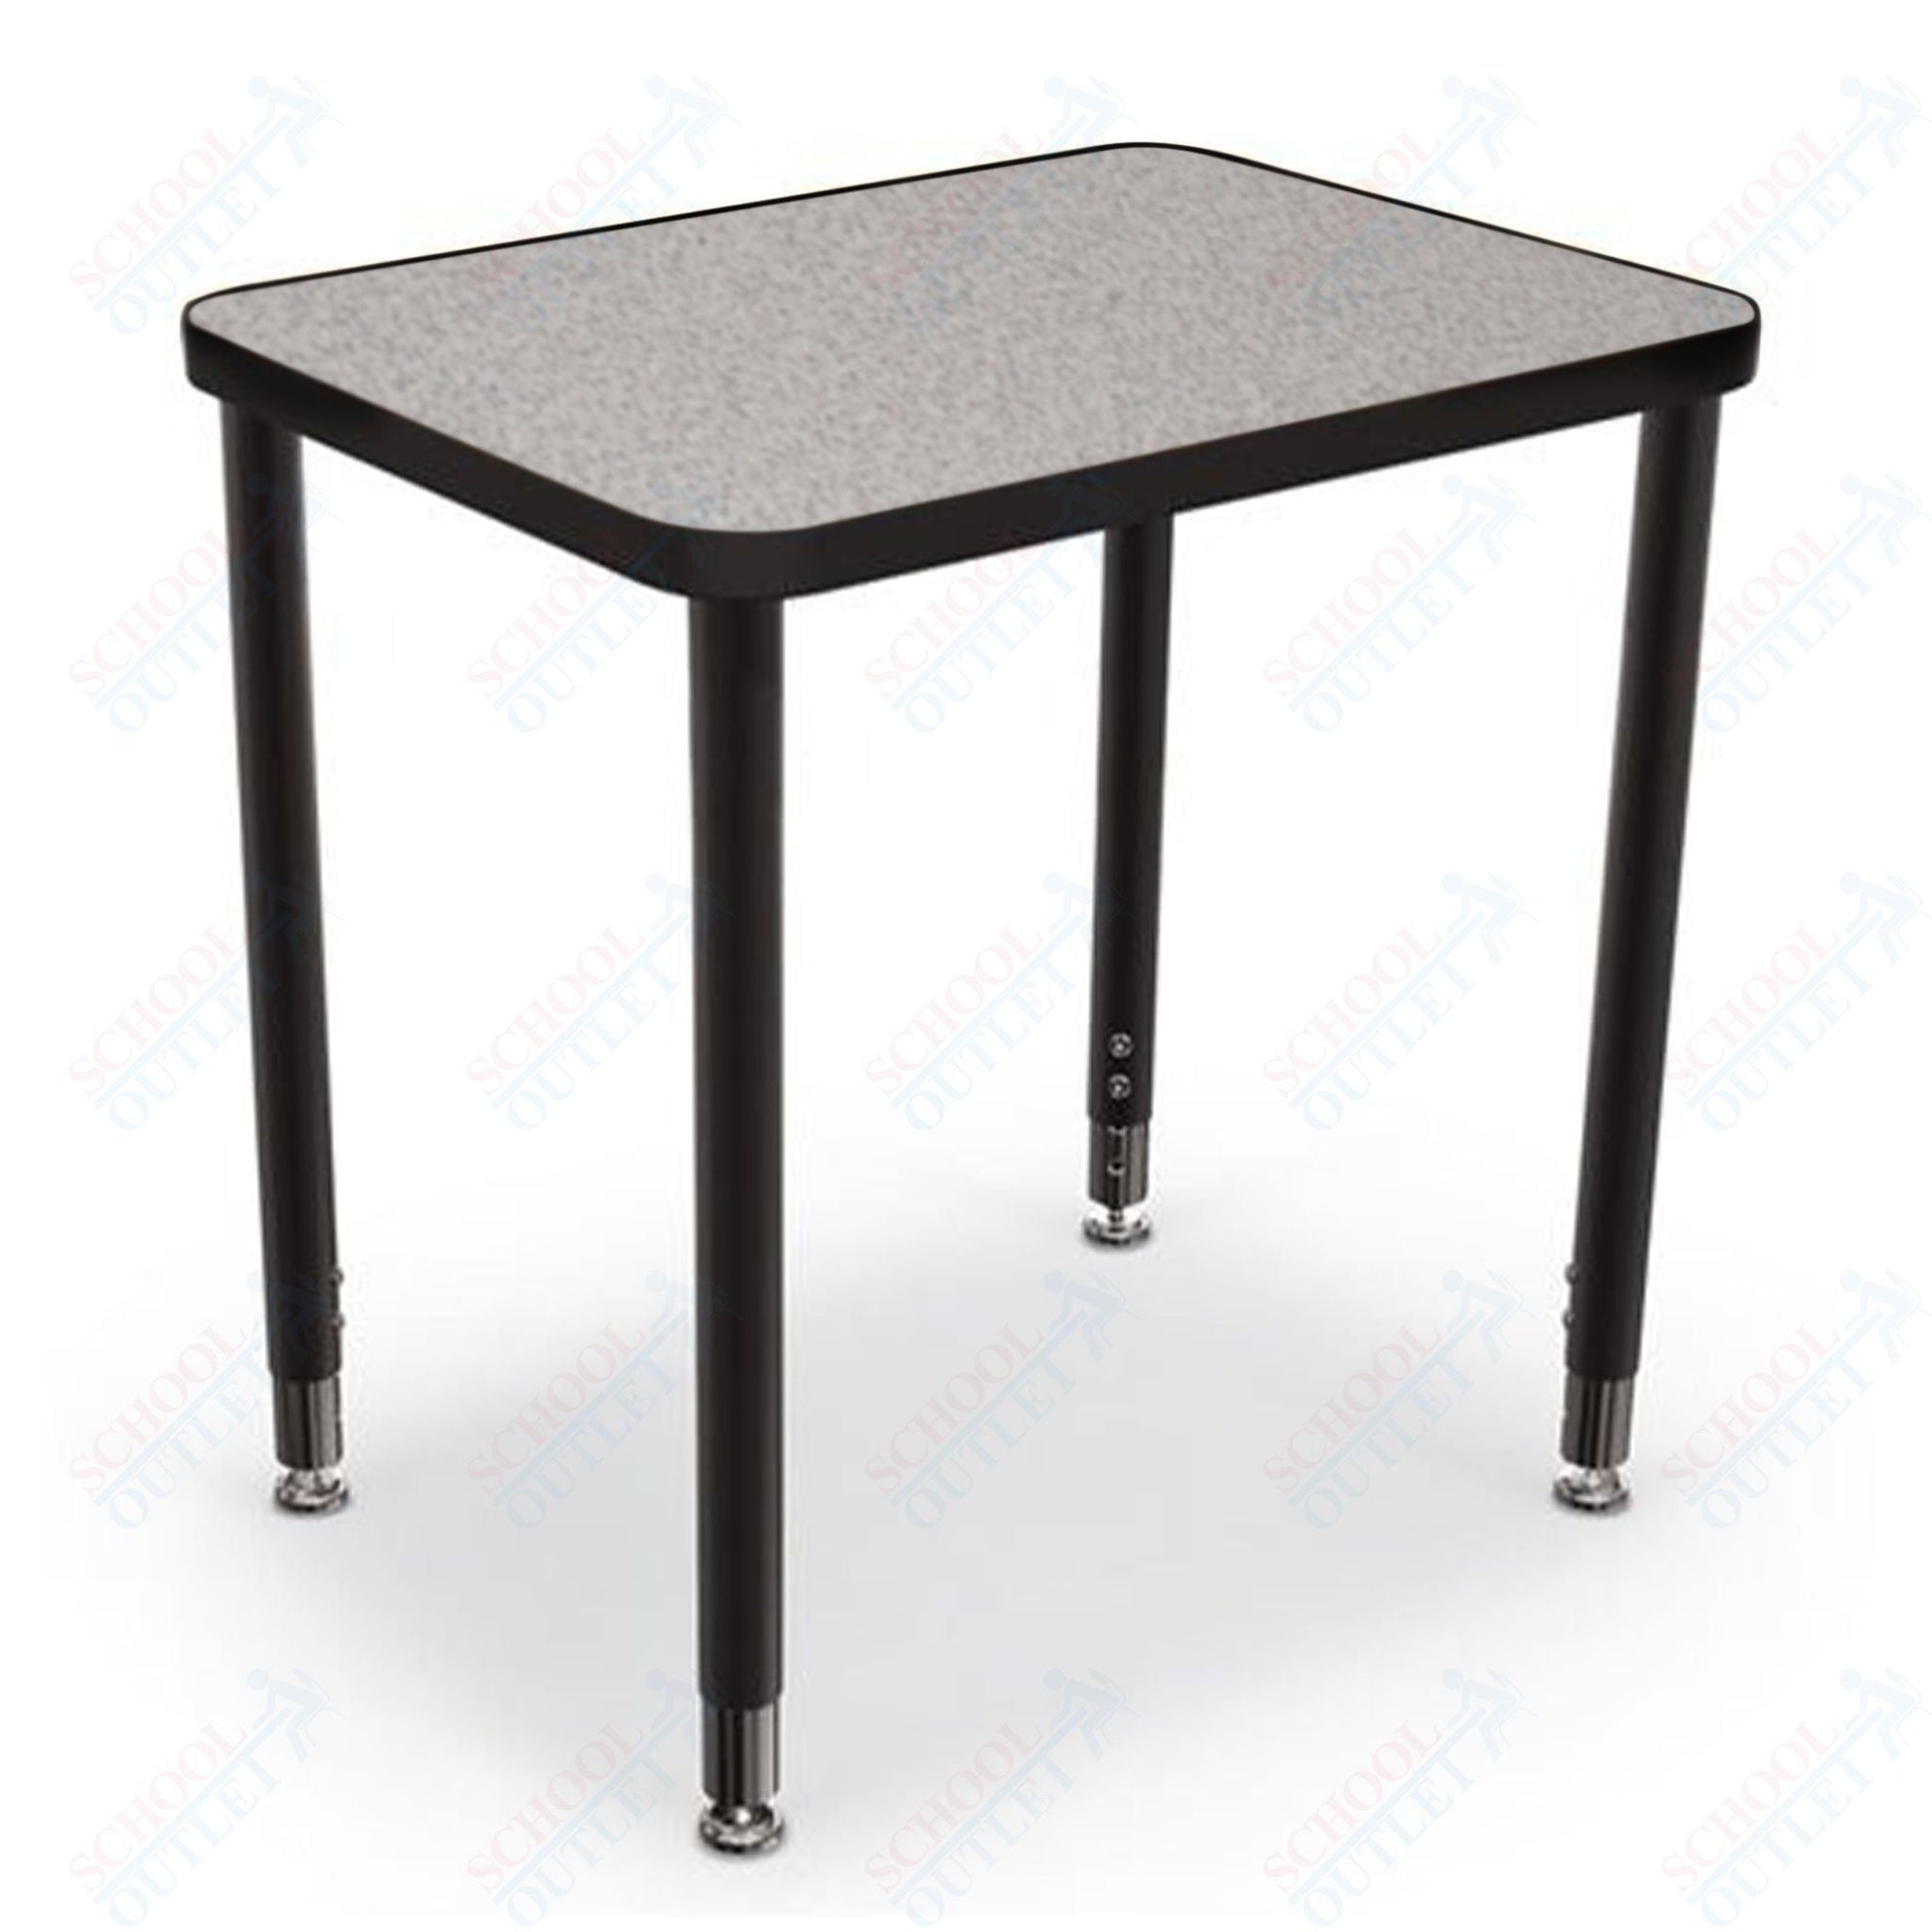 Mooreco Snap Desk Configurable Student Desking - Small Rectangle - Black Edgeband - Black Horseshoe Legs (Mooreco 103321) - SchoolOutlet